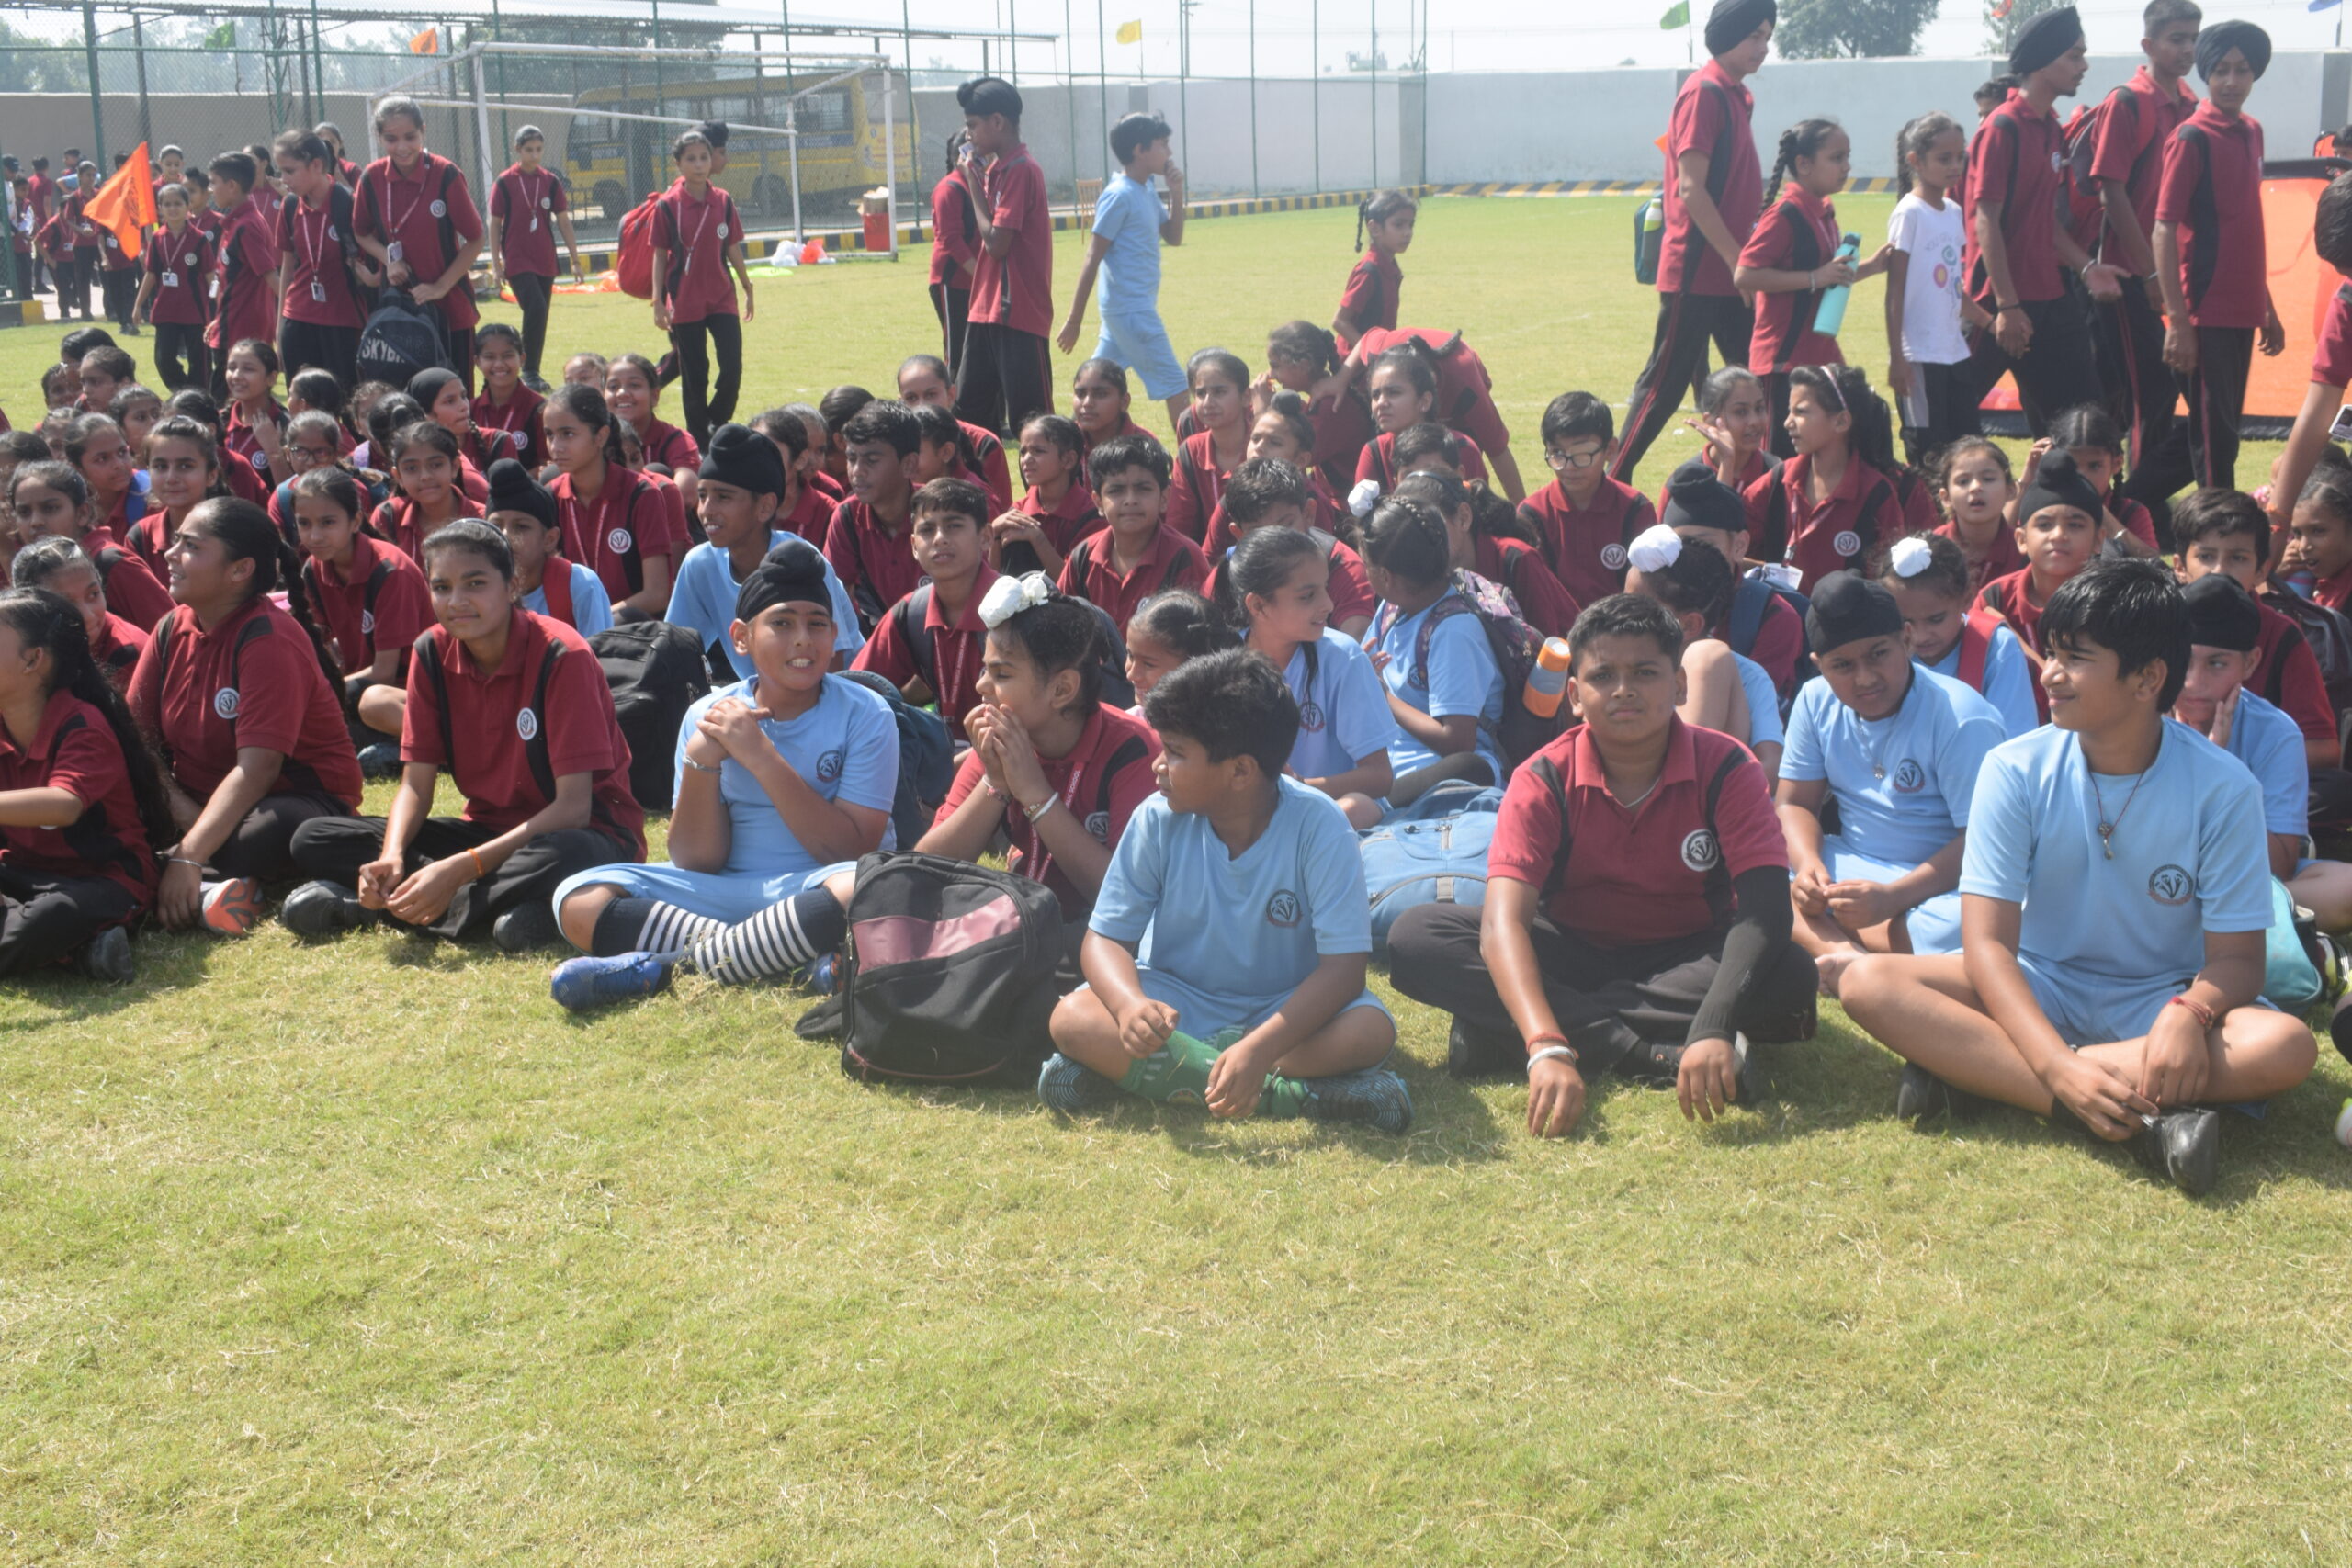 Mother Teresa Modern Public School Kurukshetra - INDIA KHELO FOOTBALL - 30-10-2023